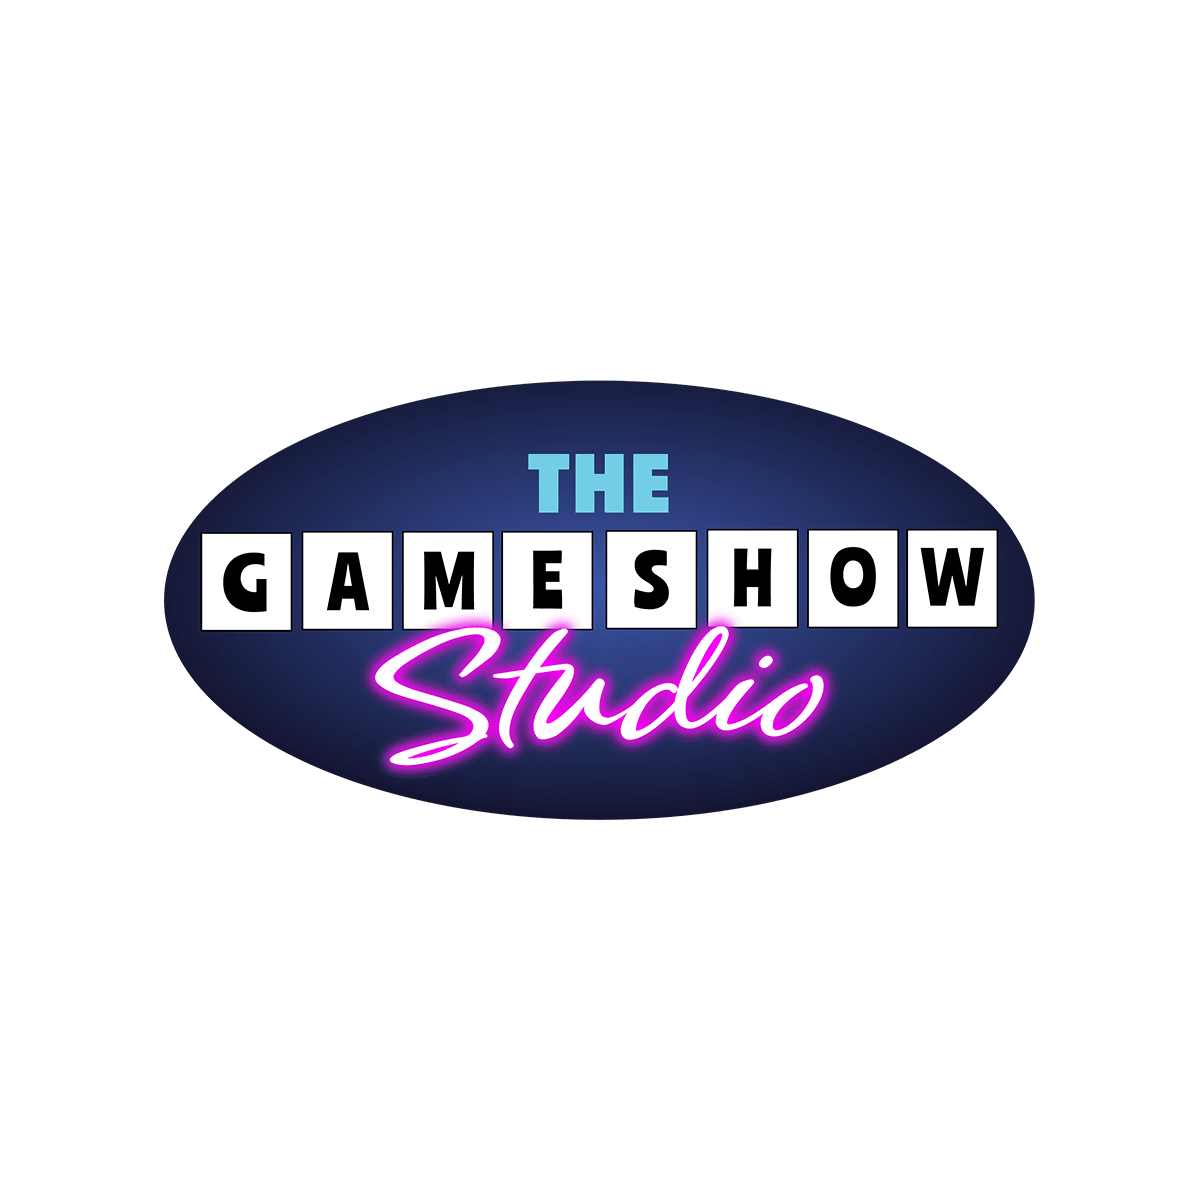 Game Show Studio - Roseville, MN 55113 - (612)431-7875 | ShowMeLocal.com